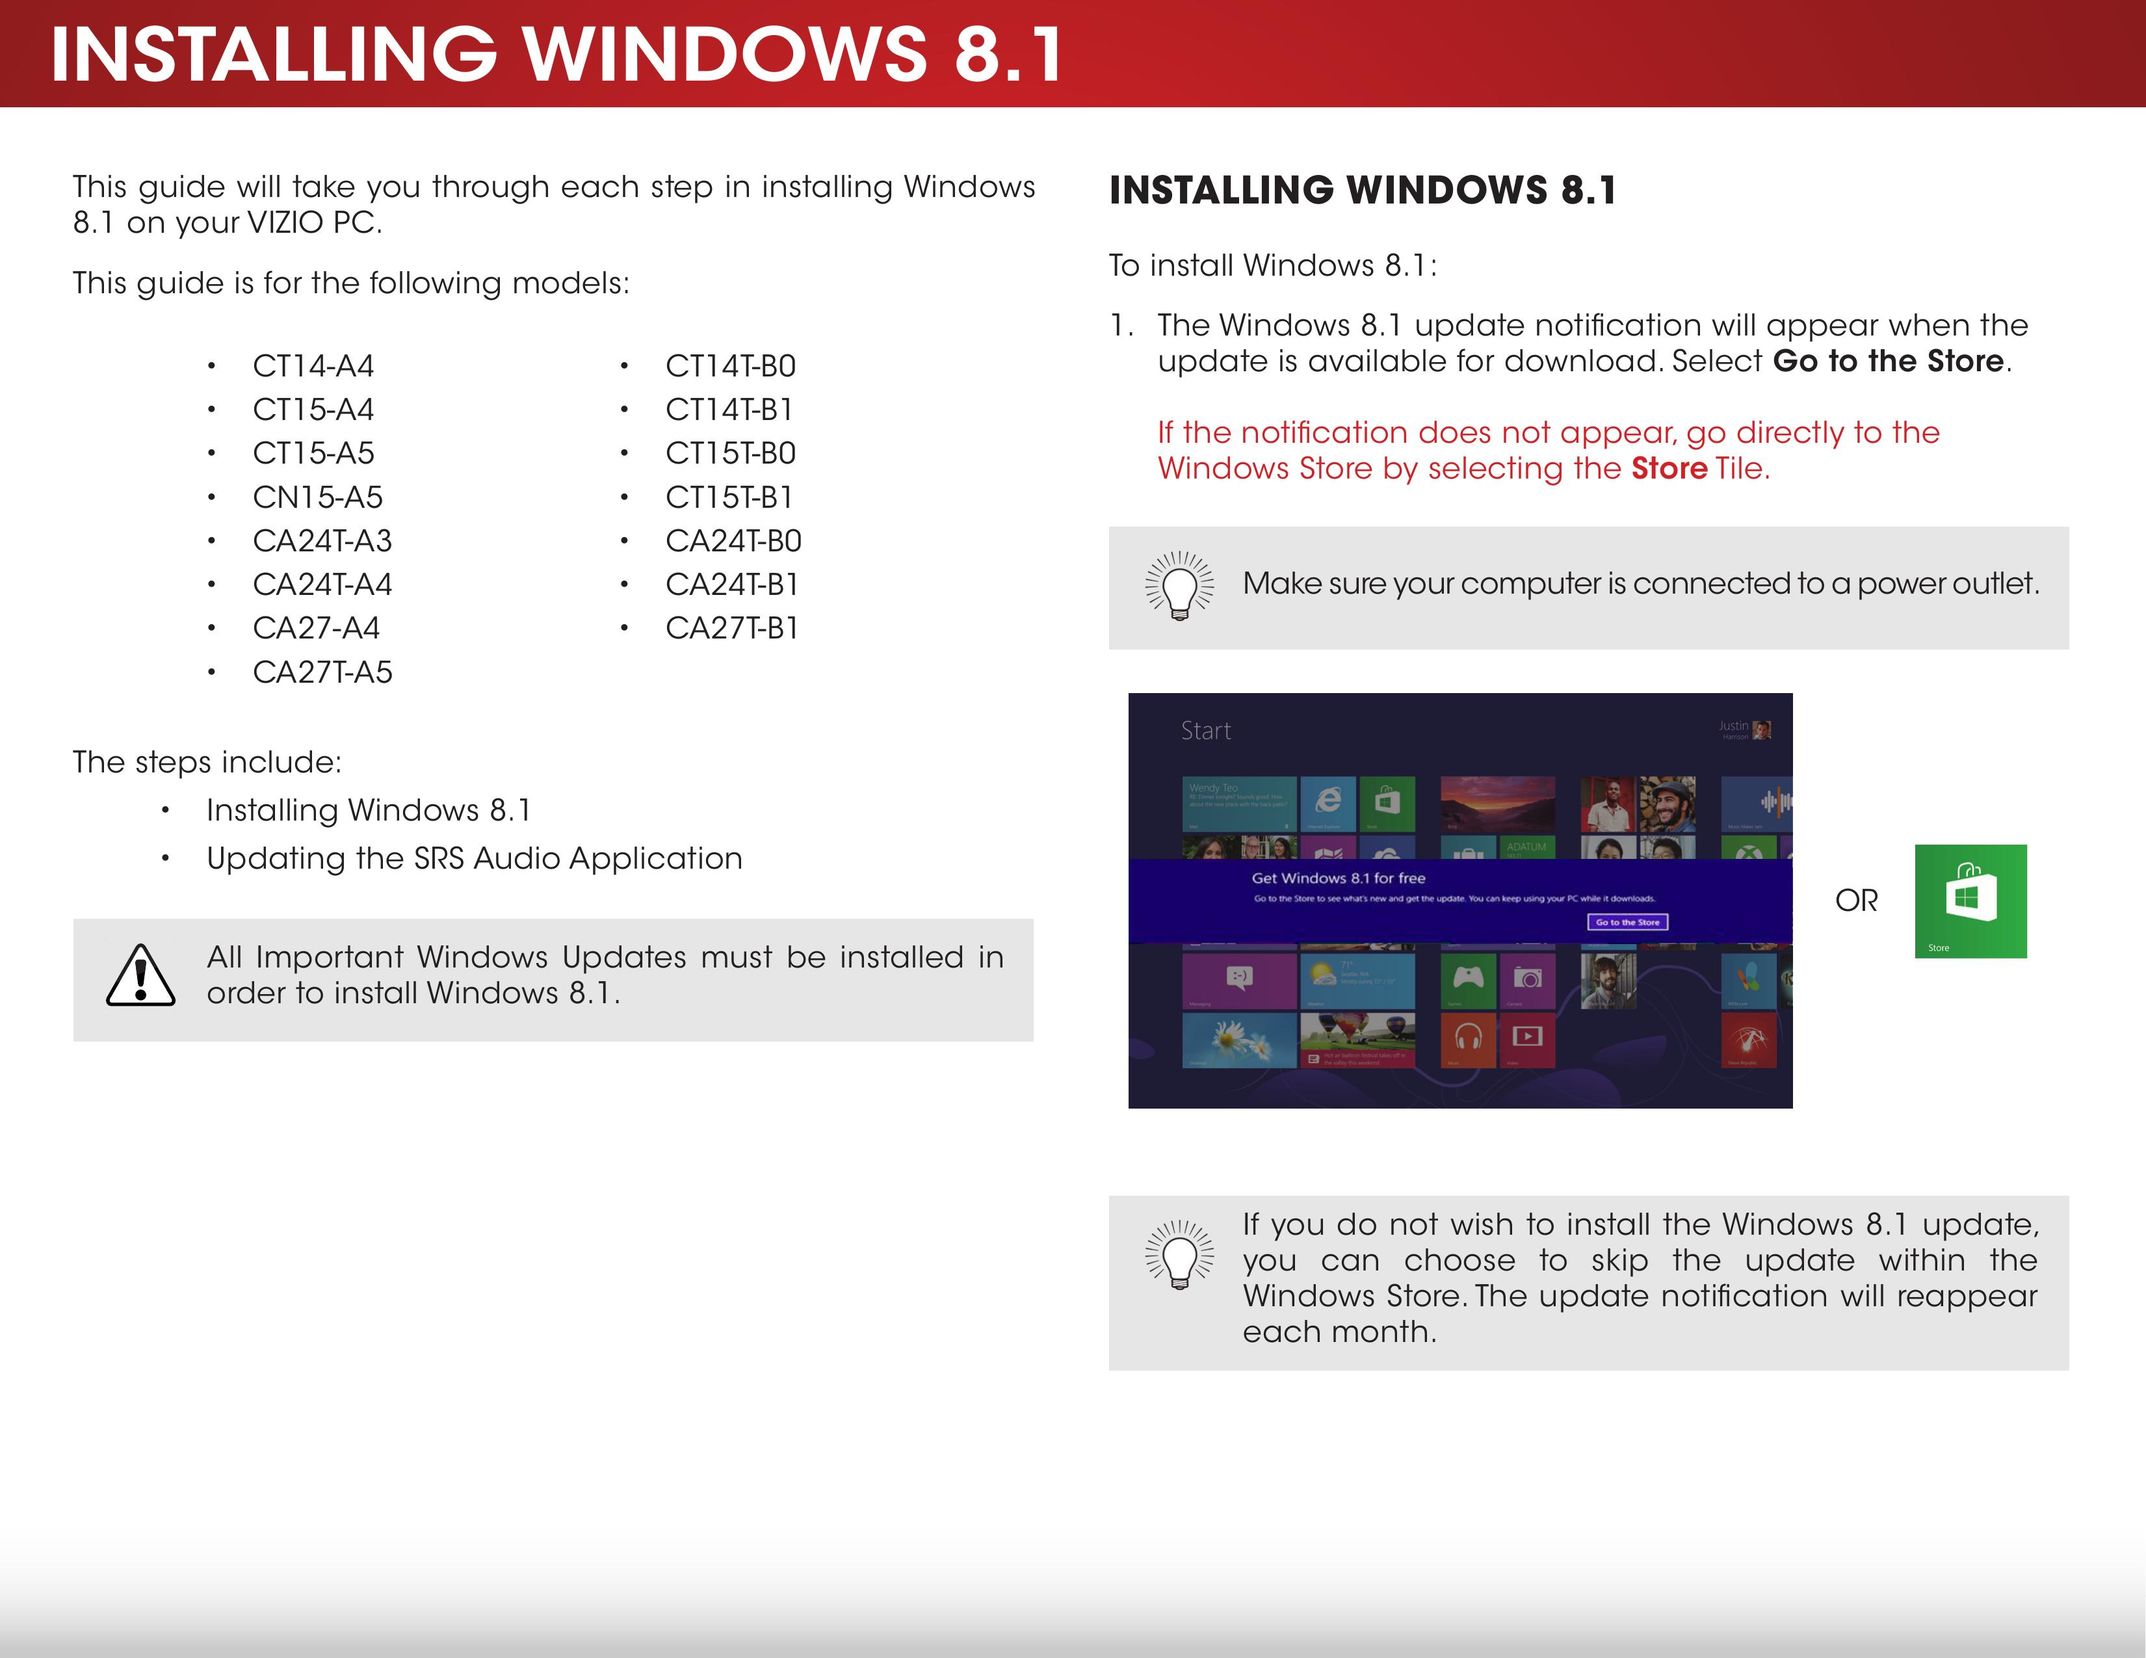 Microsoft CA24T-B1 Window User Manual